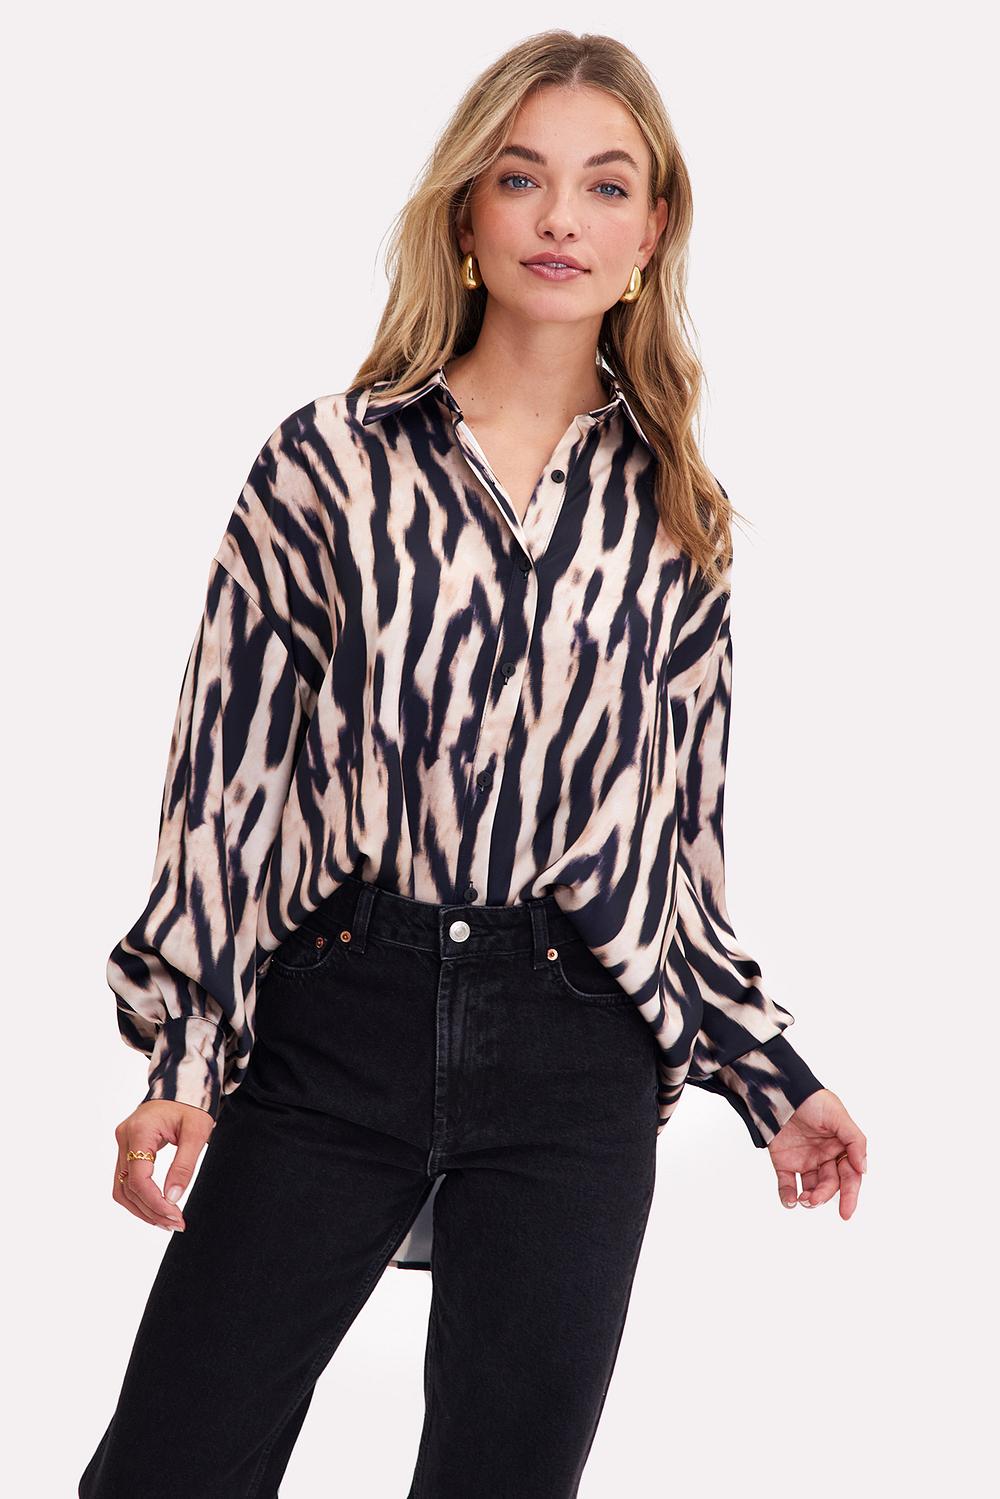 Bruine blouse met zebraprint